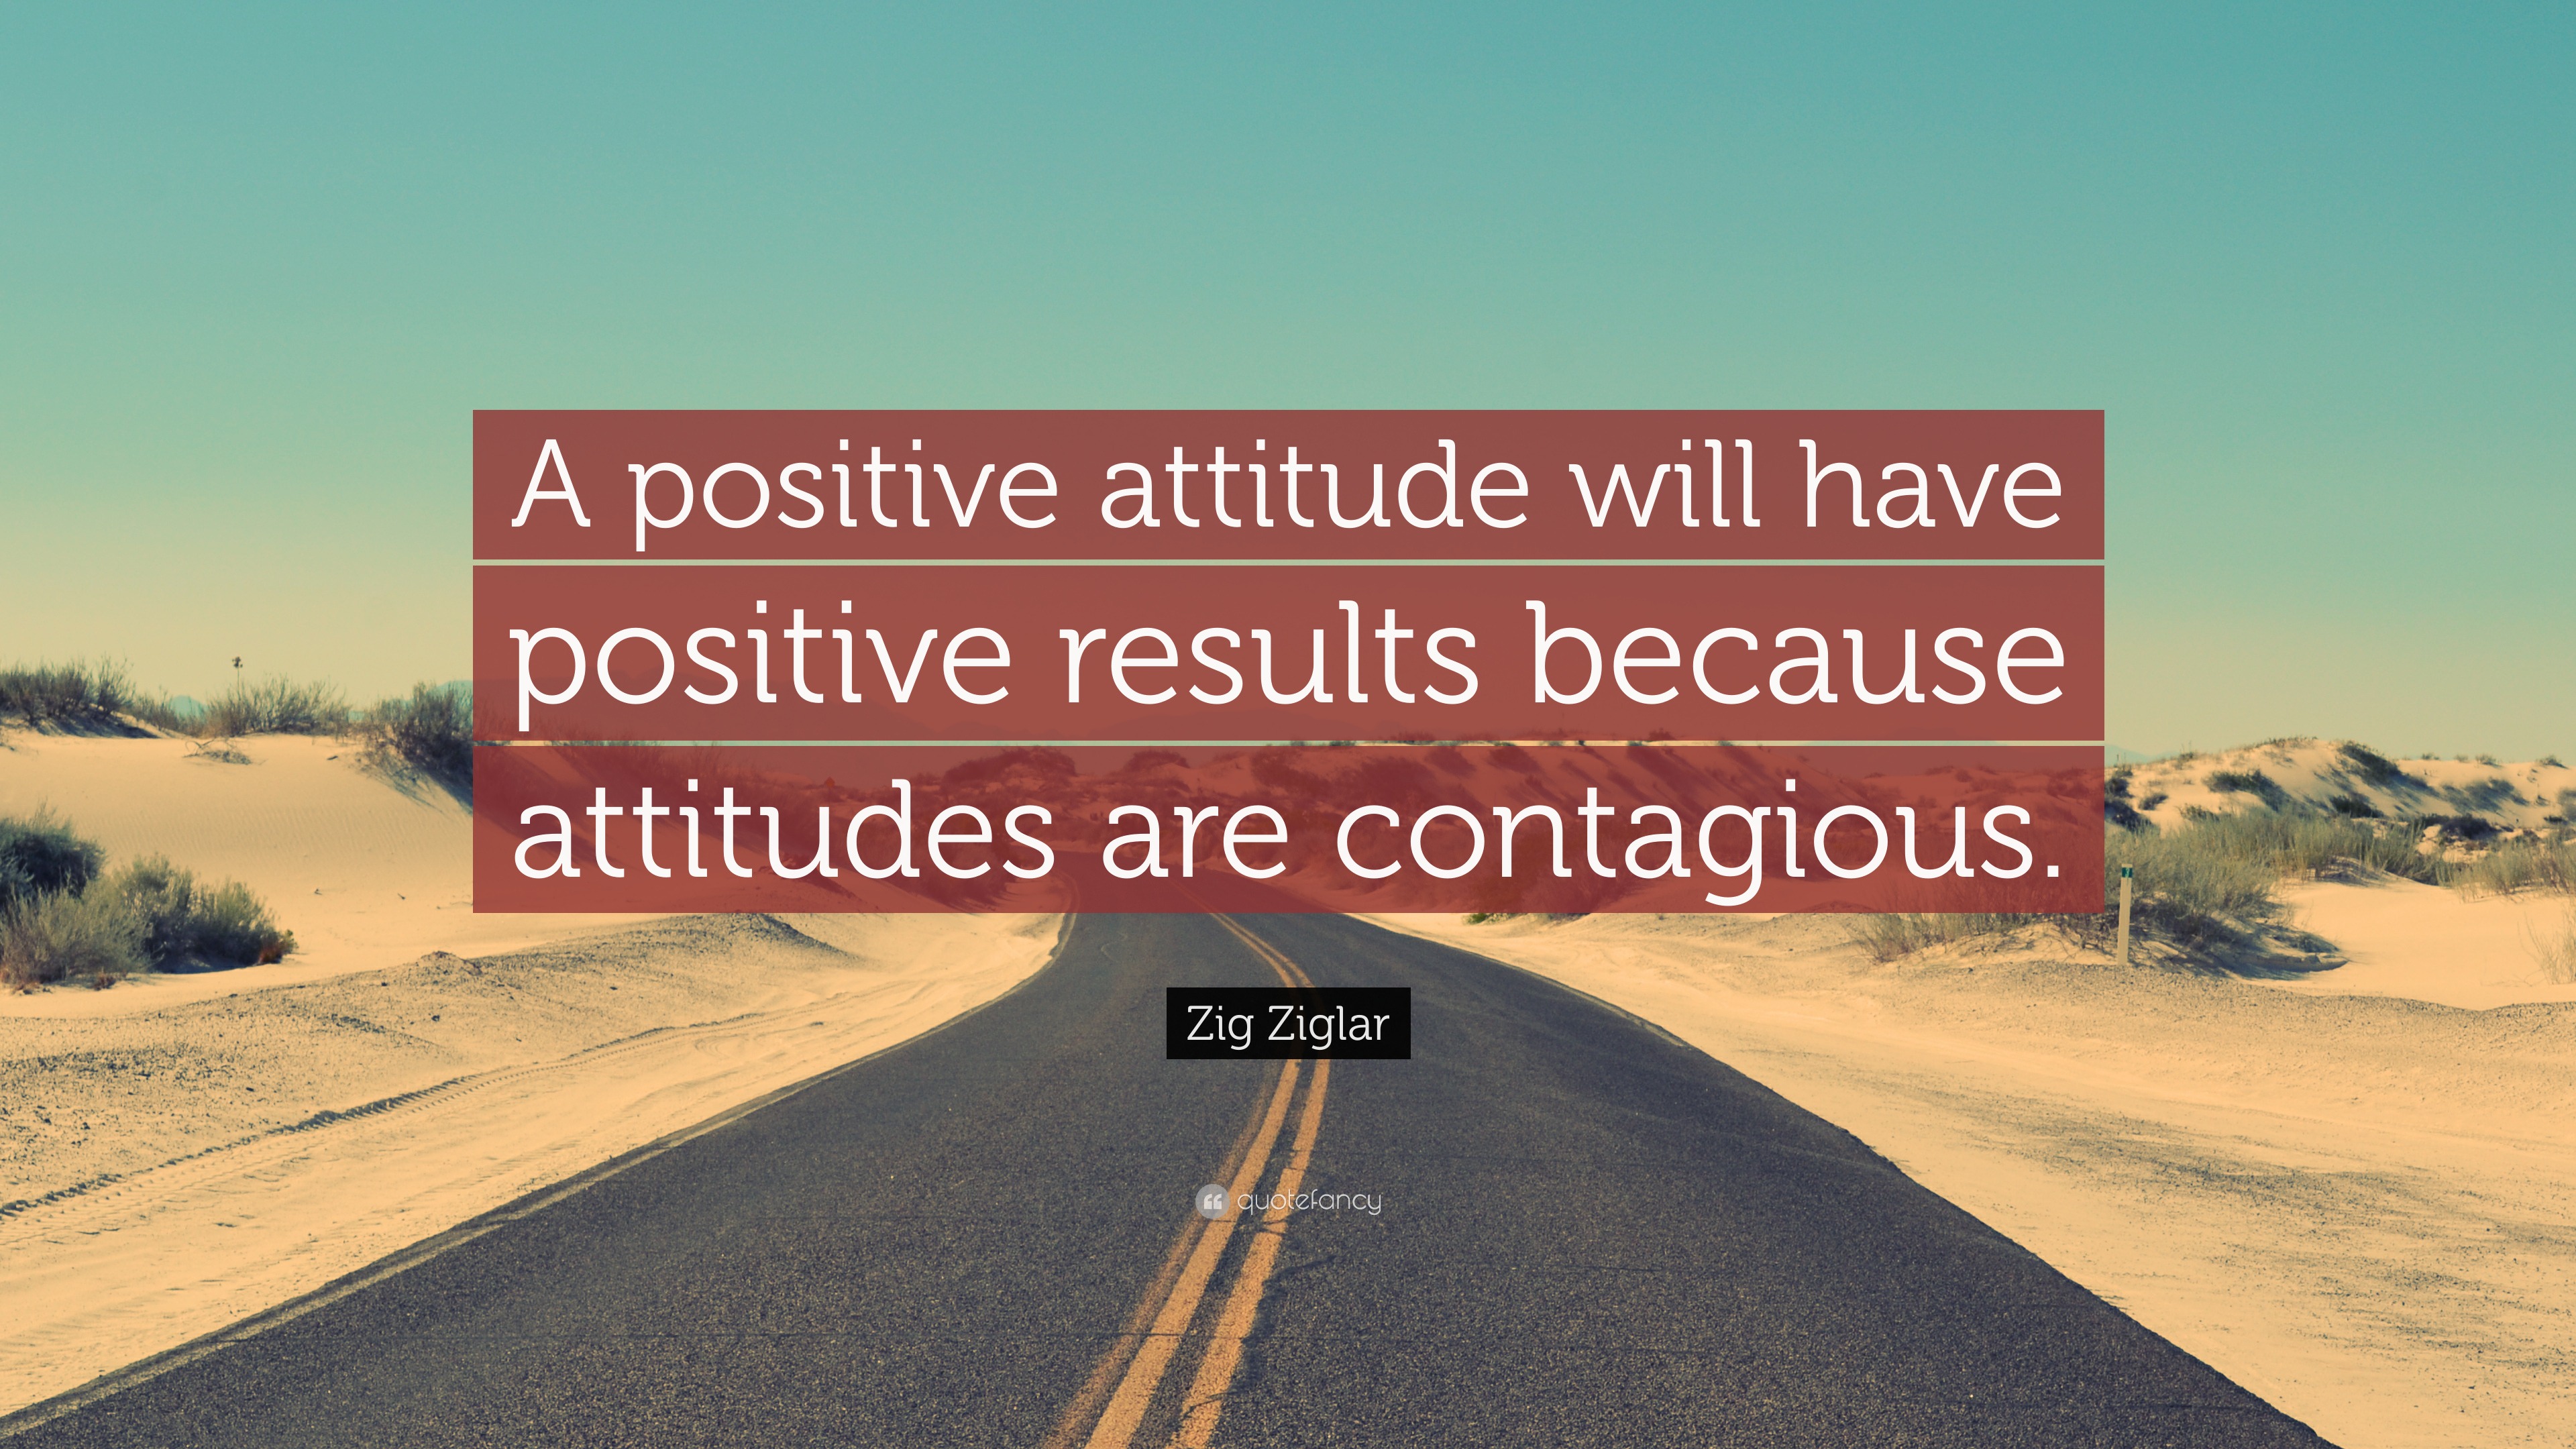 Download Zig Ziglar Quote: "A positive attitude will have positive ...